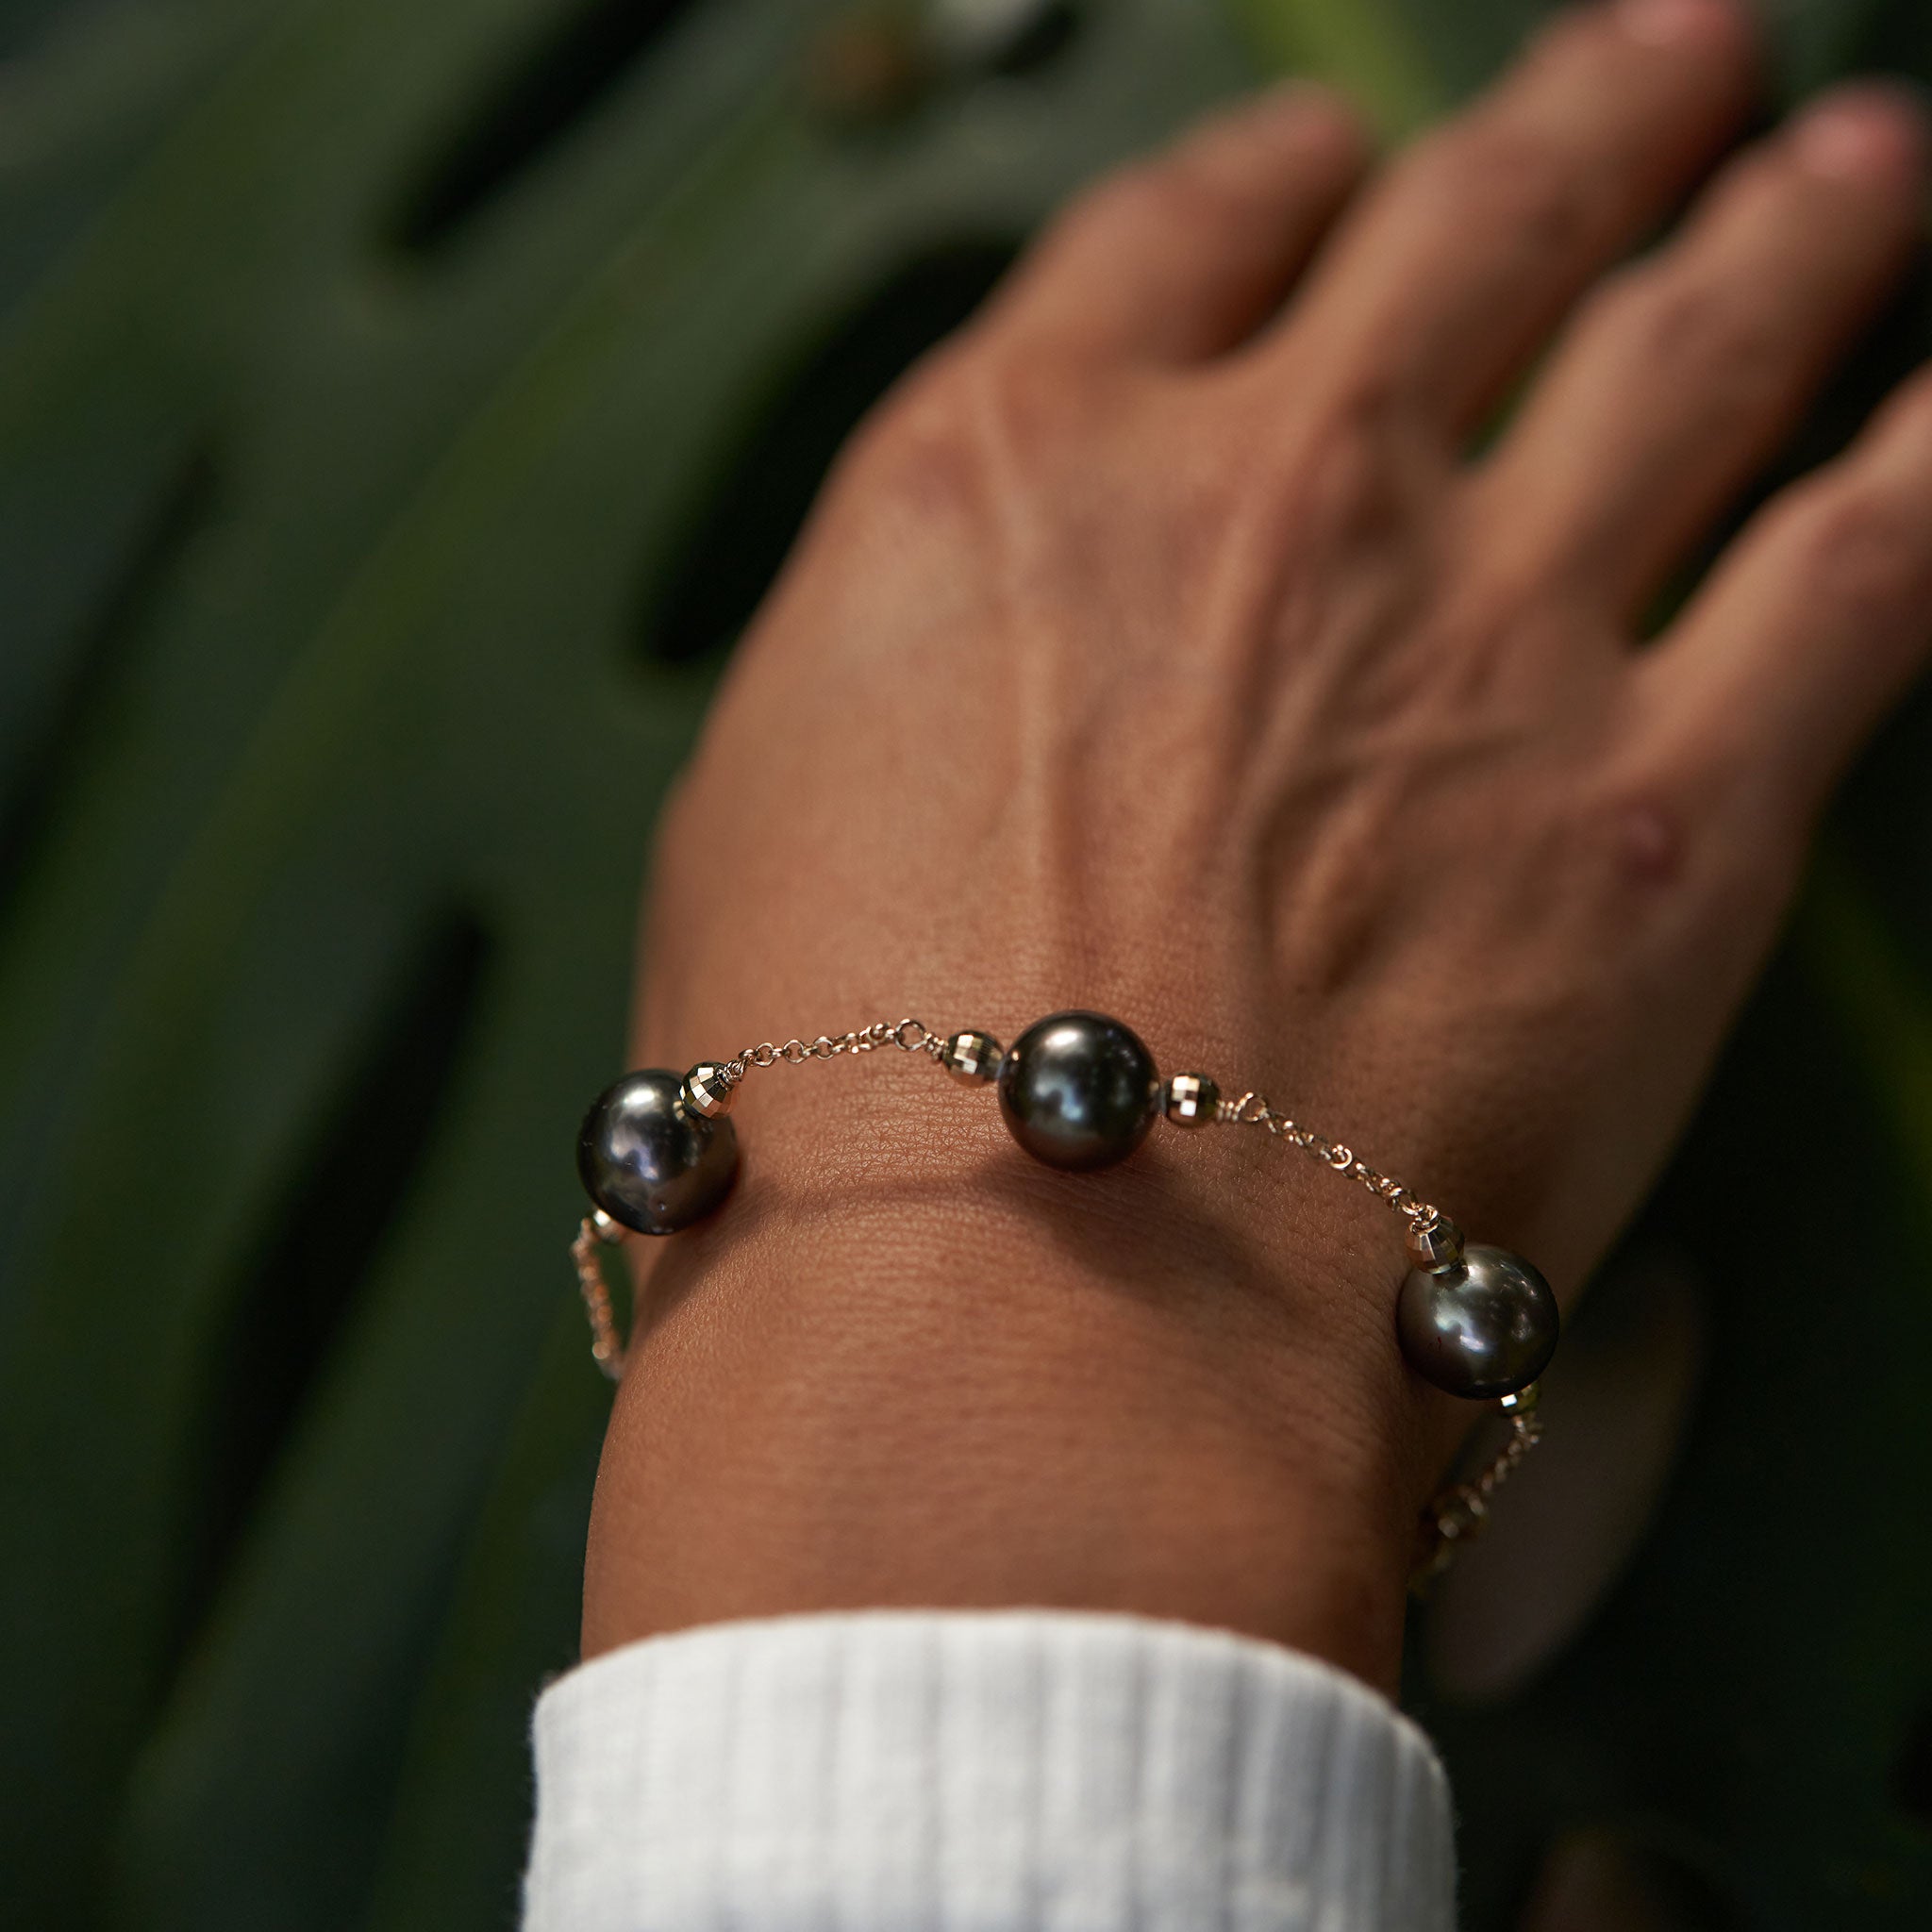 Tahitian Black Pearl Bracelet in Gold - 9-10mm - Size 7.5-8"